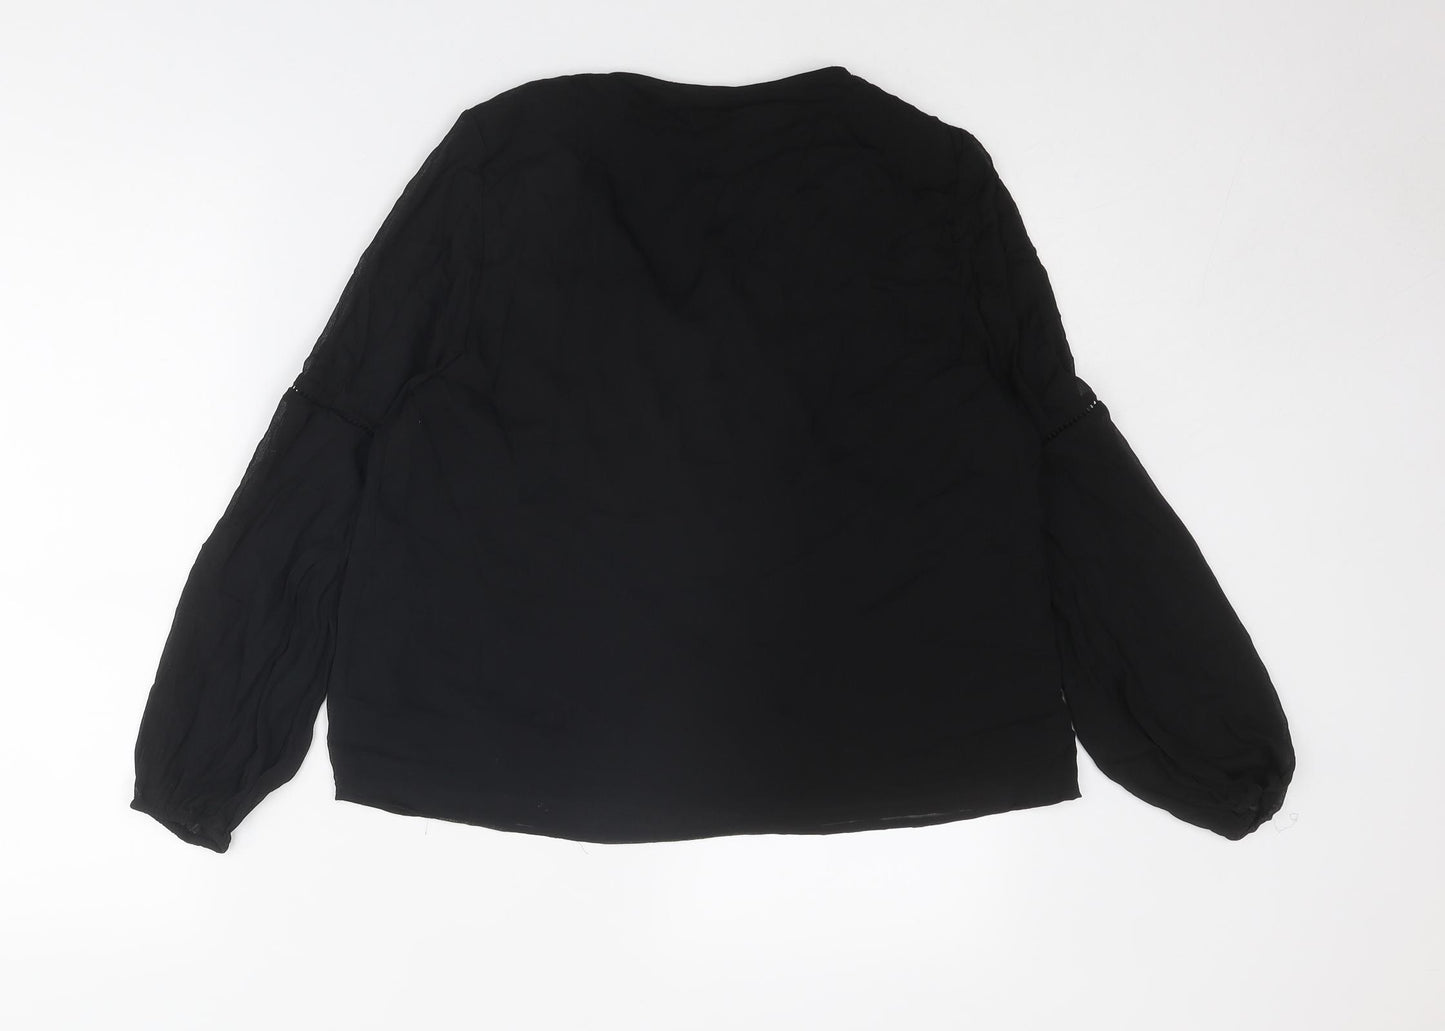 M&Co Womens Black Polyester Basic Blouse Size 16 V-Neck